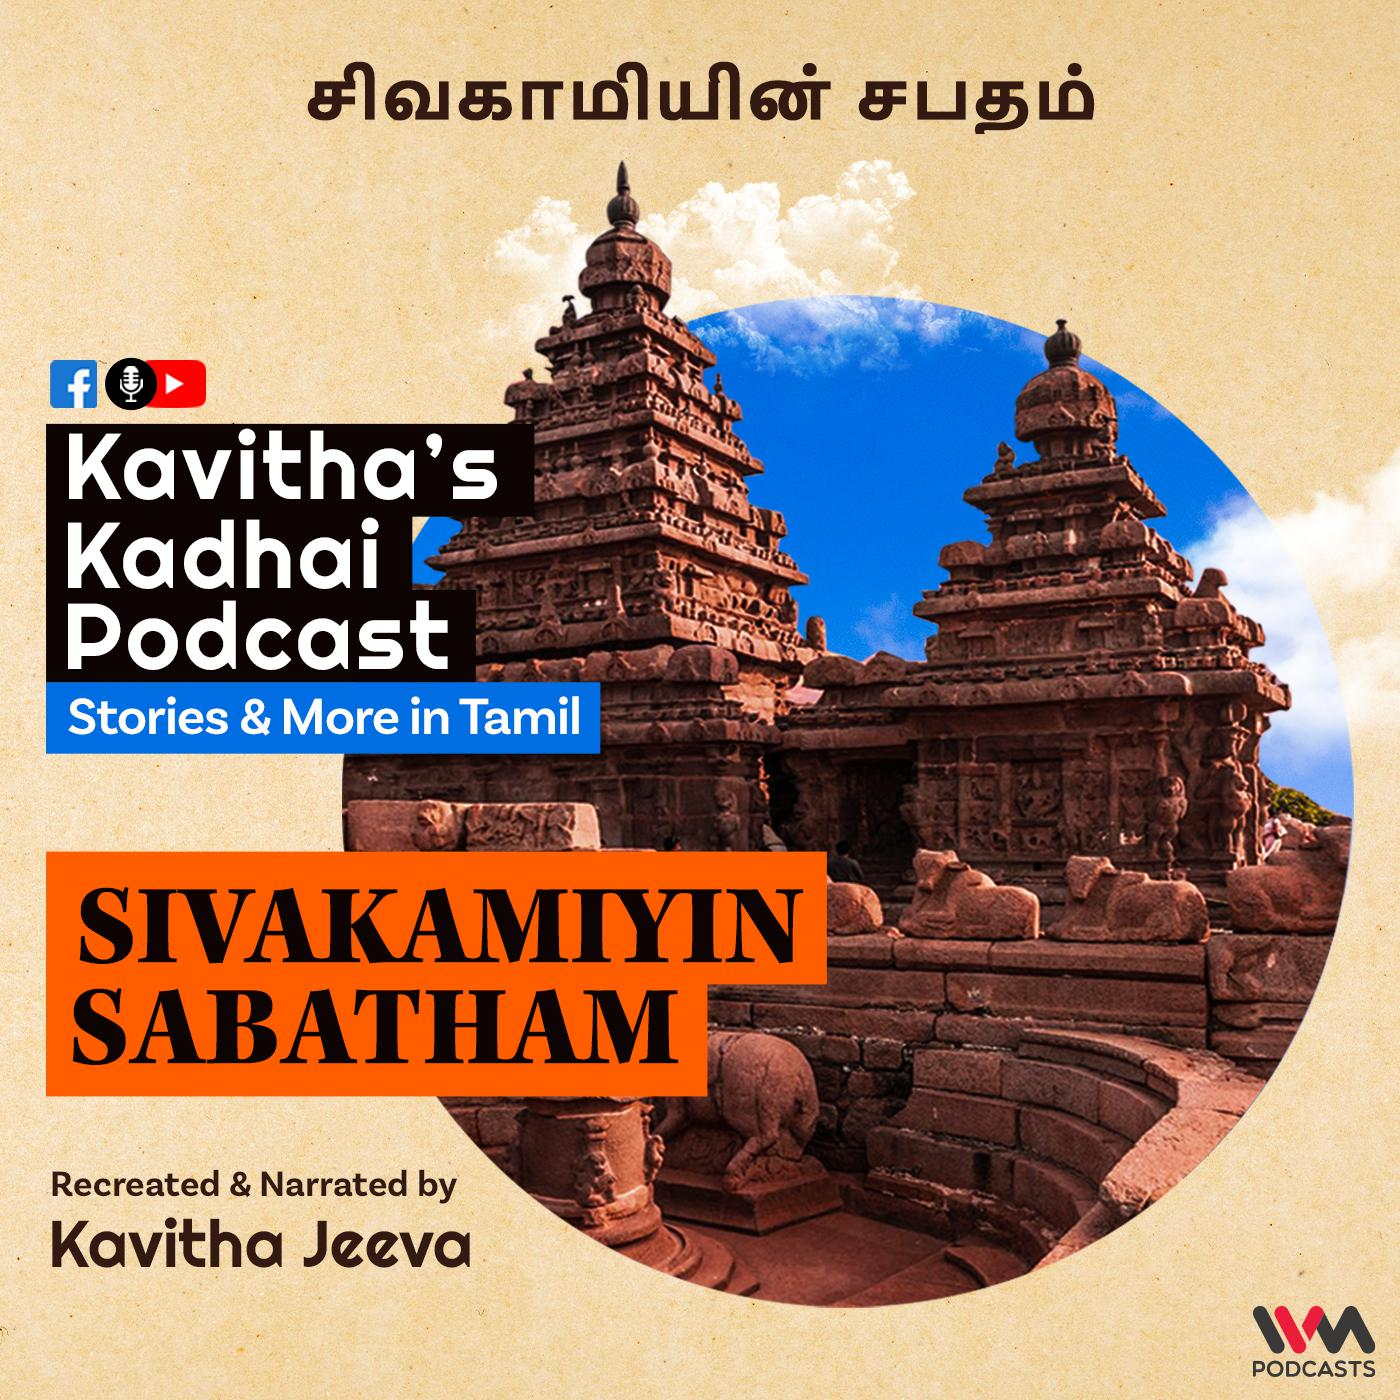 KadhaiPodcast’s Sivakamiyin Sabatham with Kavitha Jeeva - Episode #143